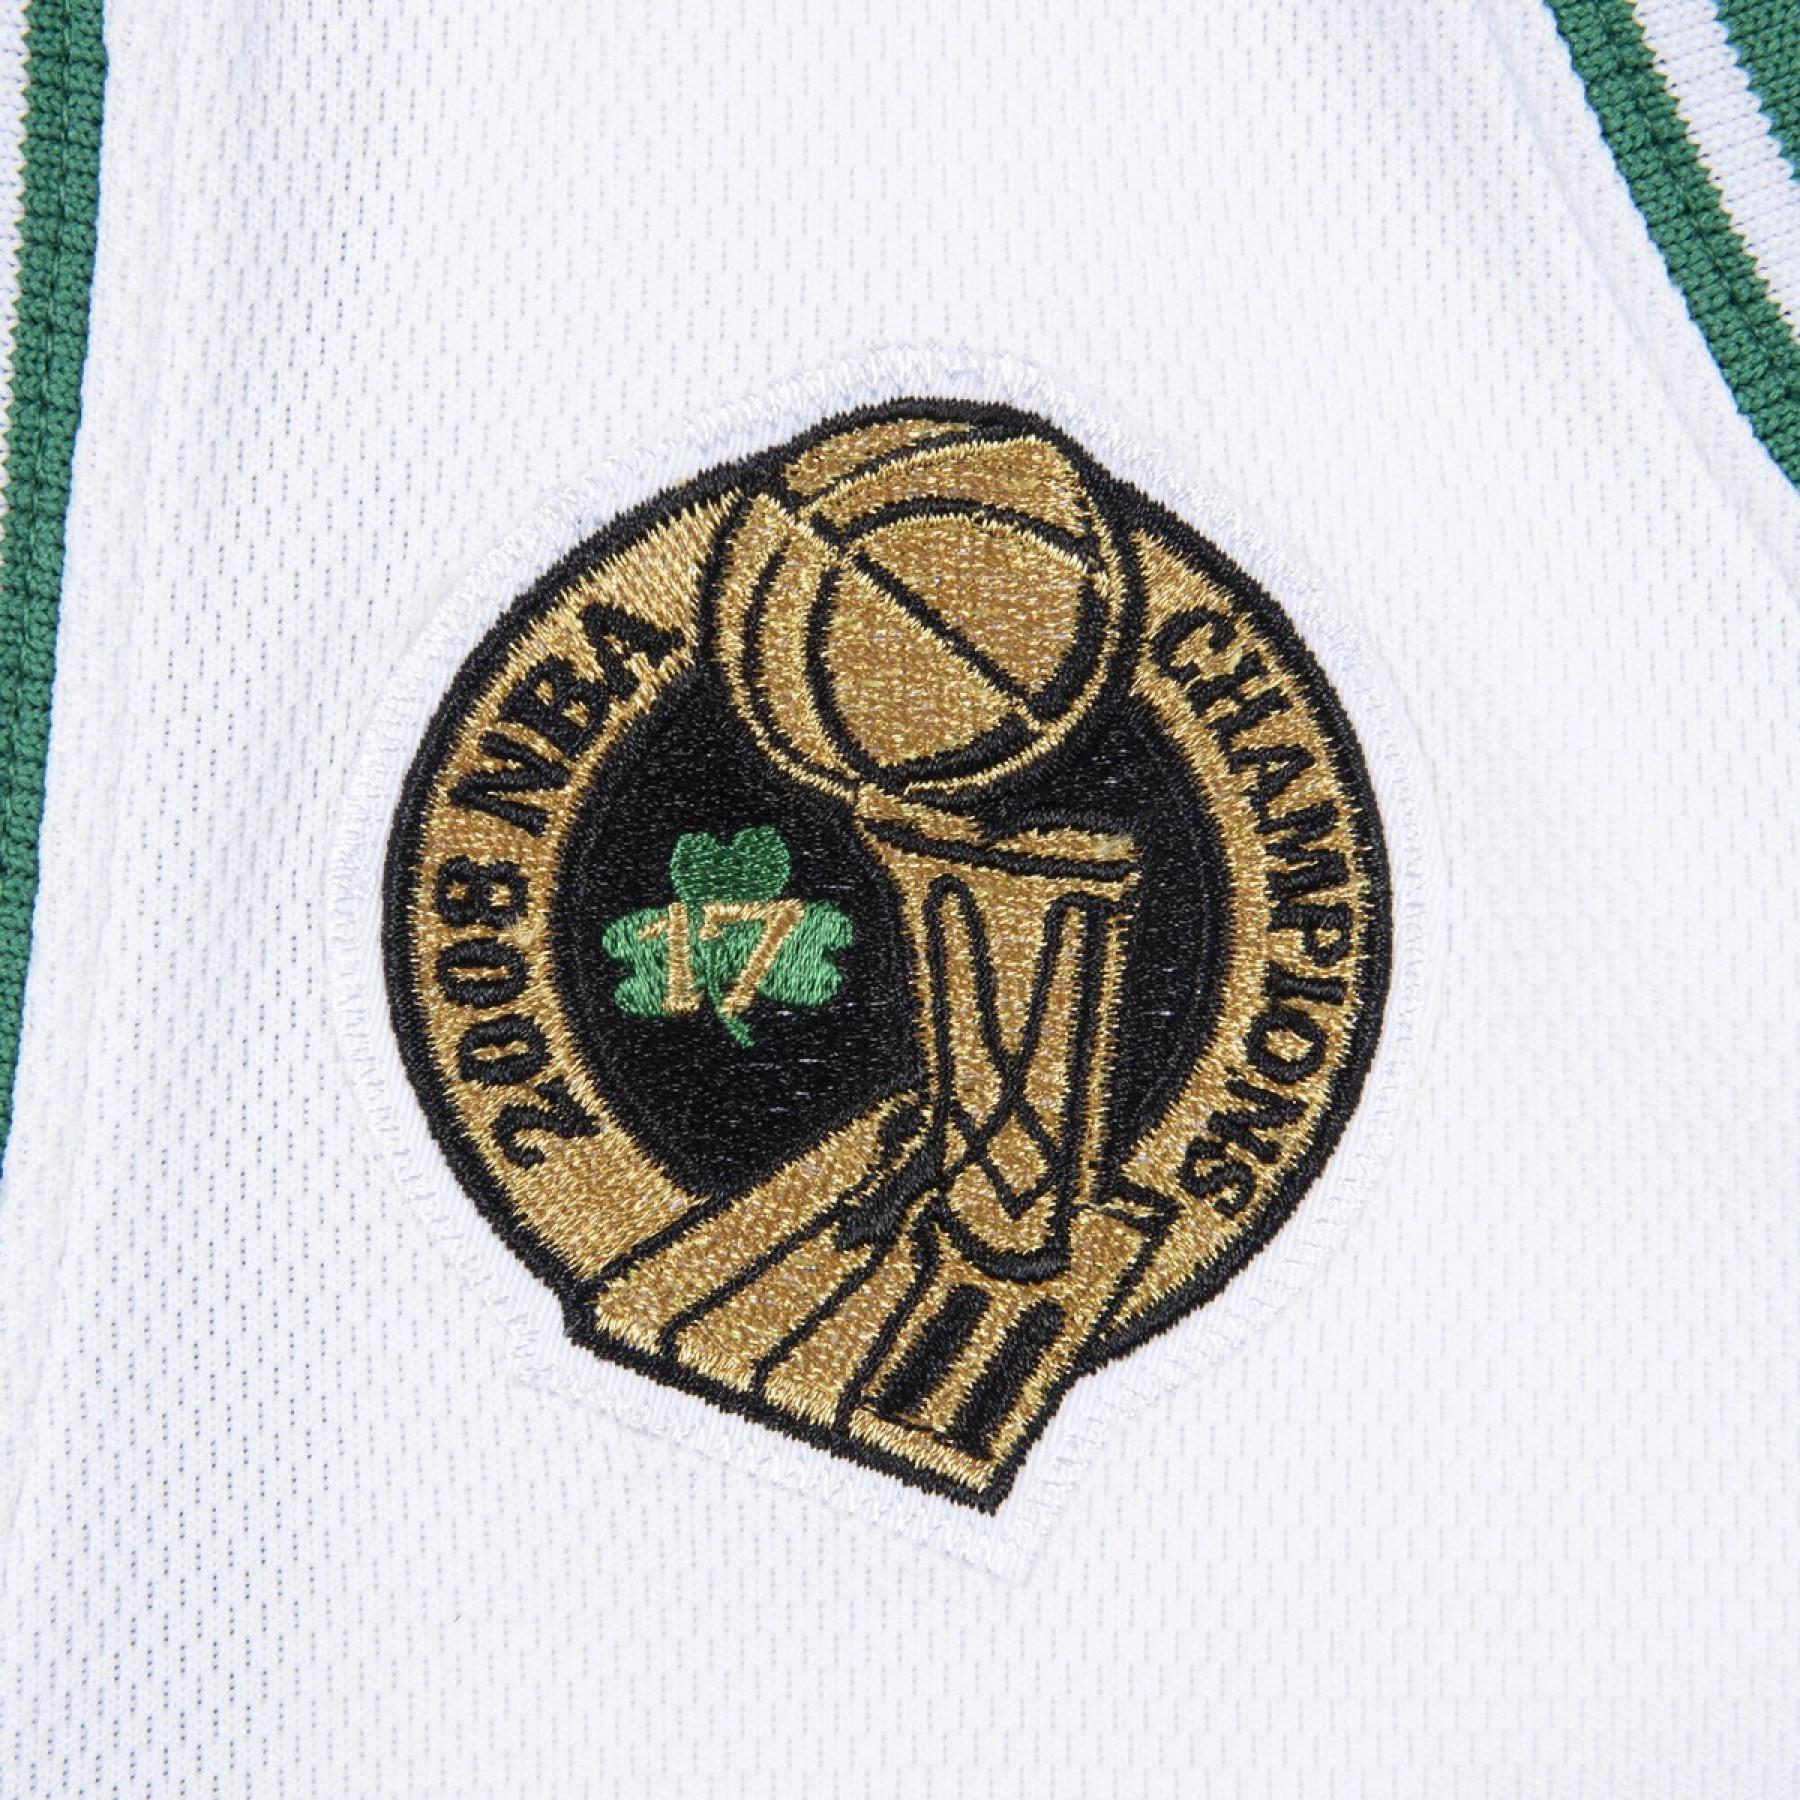 Authentic Jersey Boston Celtics Ray Allen 2008/09